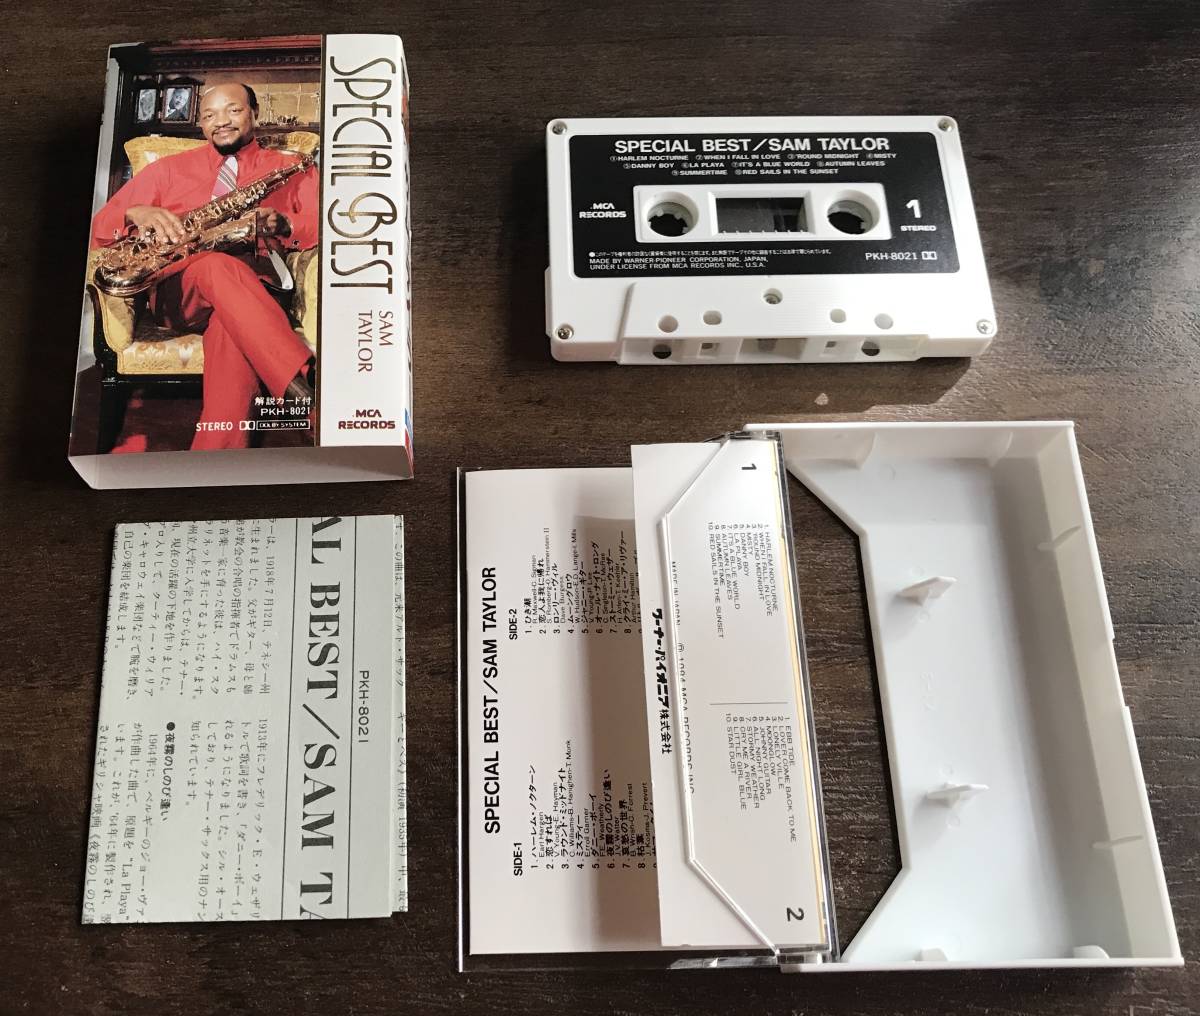  cassette tape Sam * Taylor SamTaylor search :EP LP CD tenor sax the best 